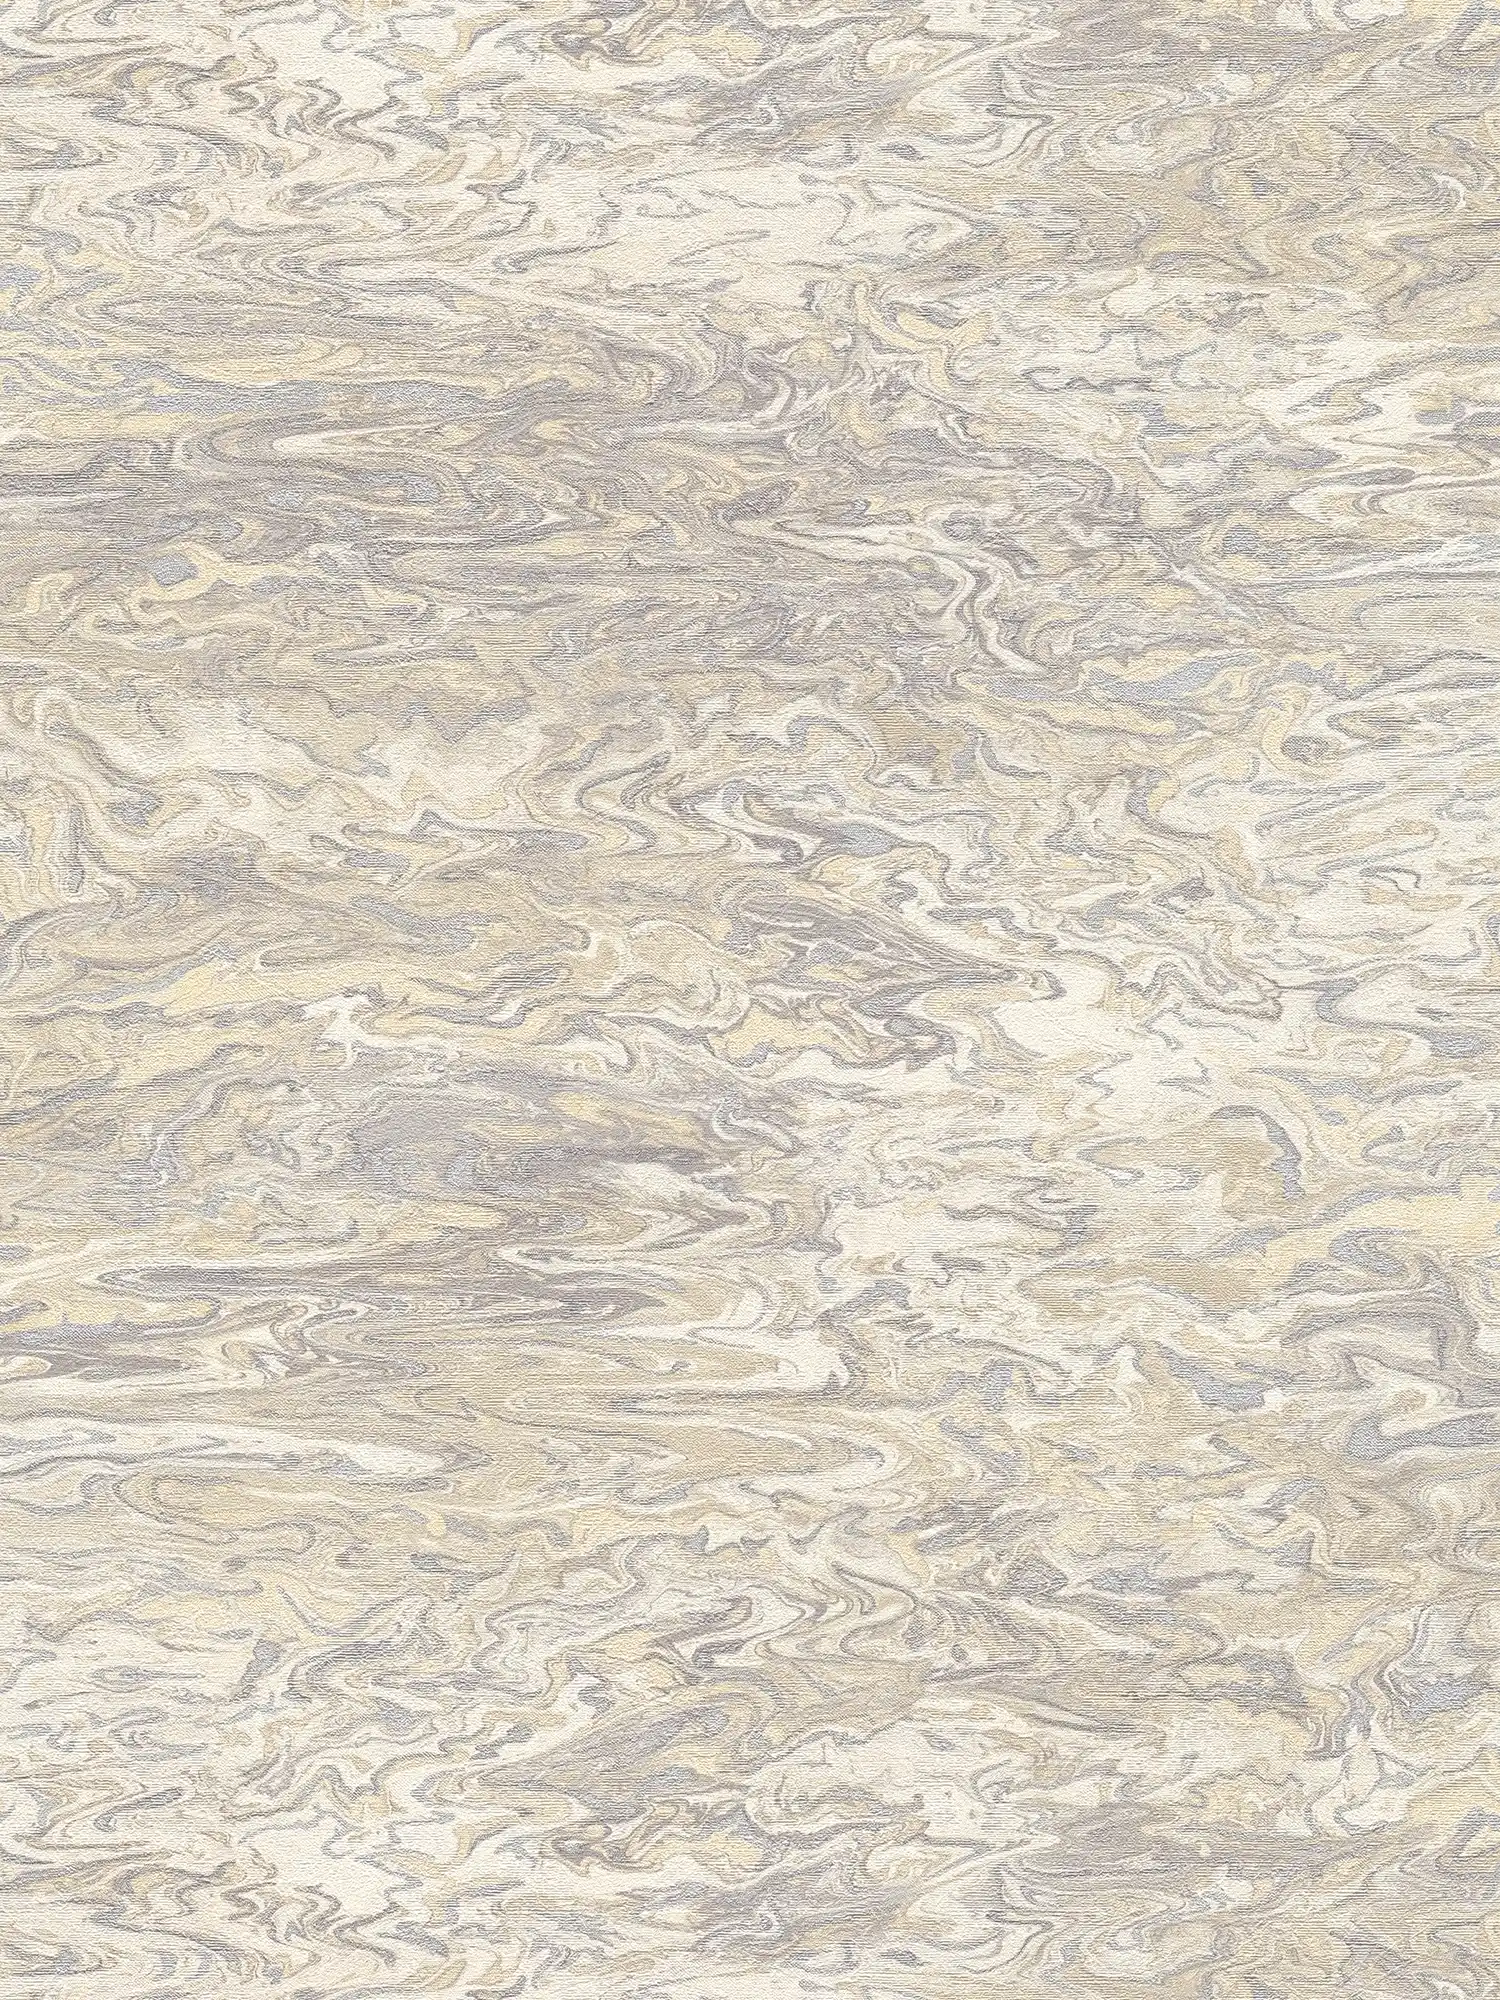 Gemarmerd behang Marmerpapier effect - wit, beige, crème
